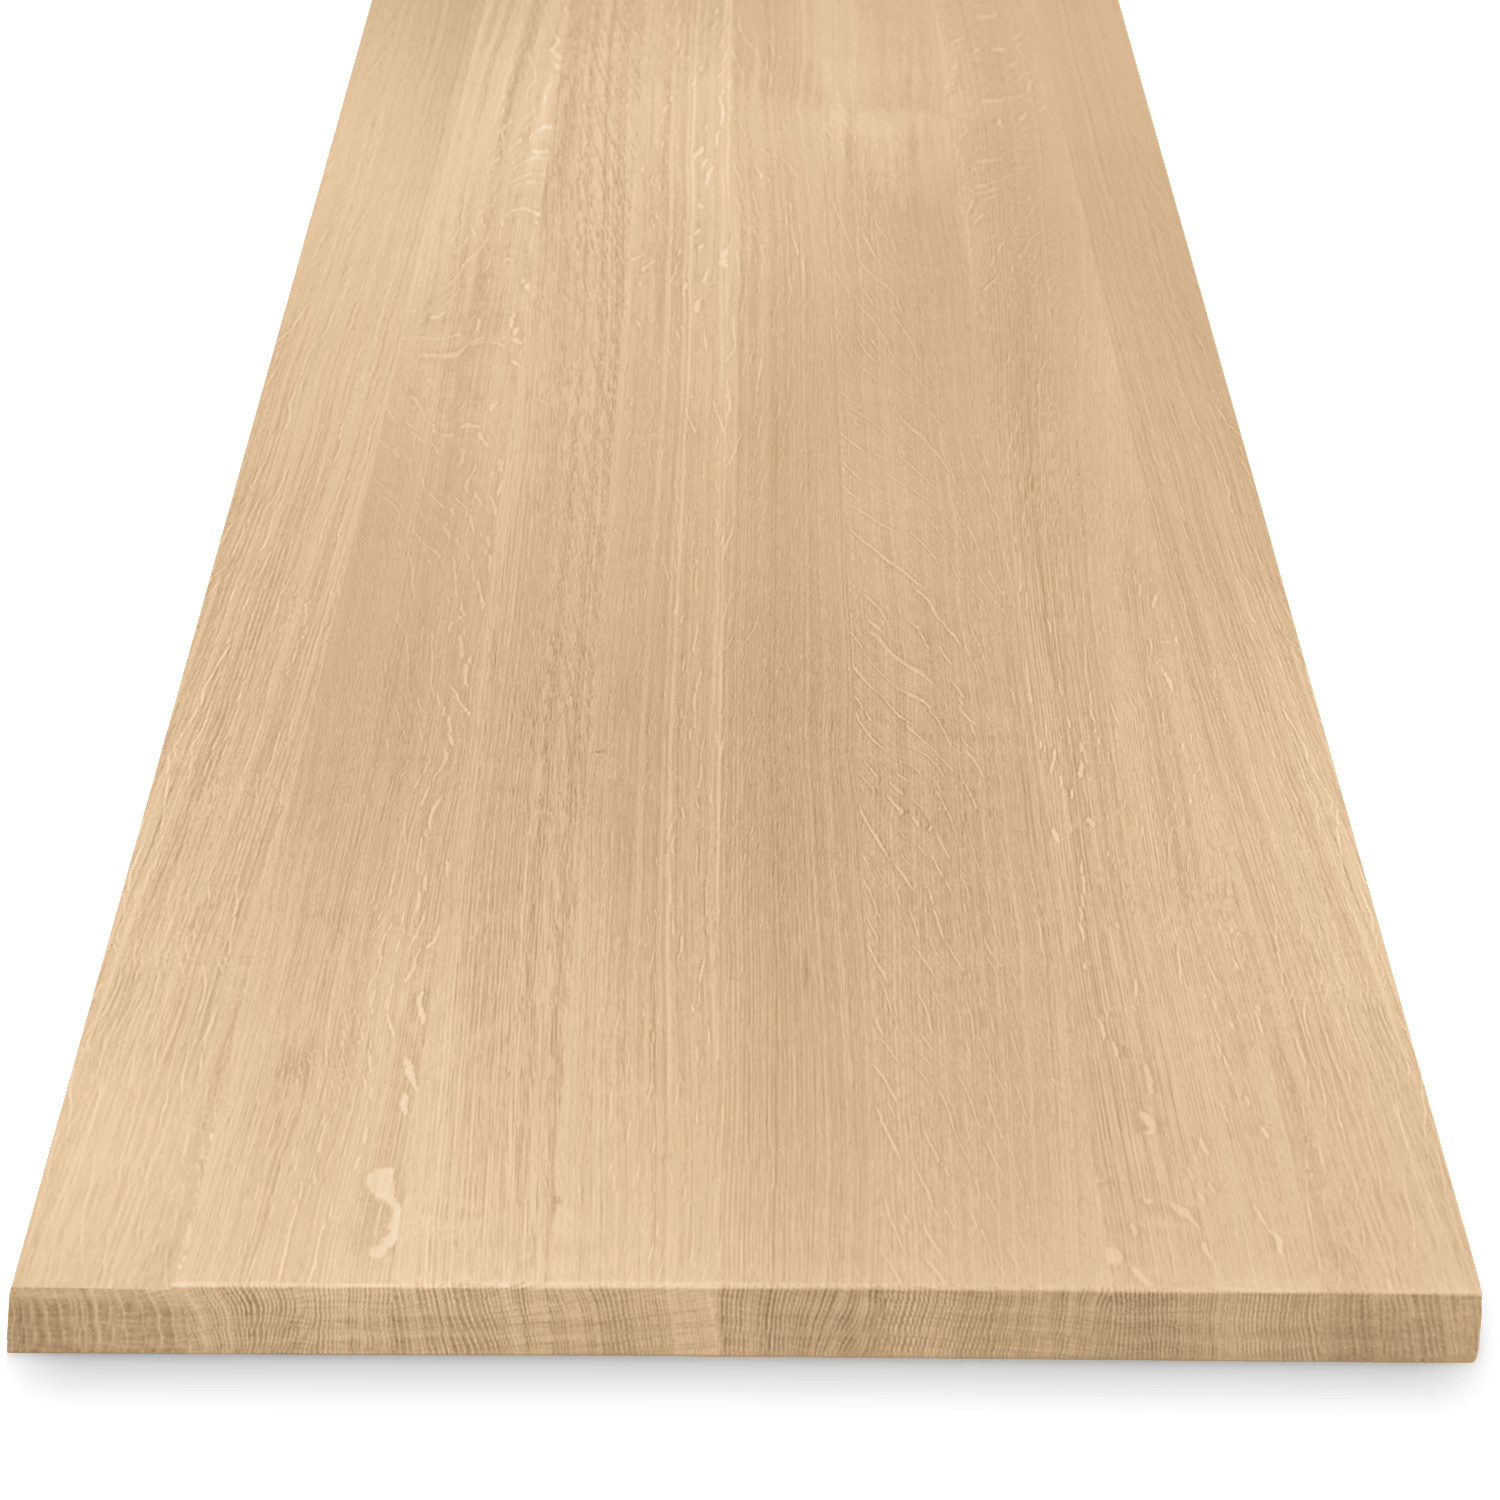  Eiken tafelblad - 4 cm dik (1-laag) - Diverse afmetingen - foutvrij Europees eikenhout - met brede lamellen (circa 10-12 cm) - verlijmd kd 8-12%